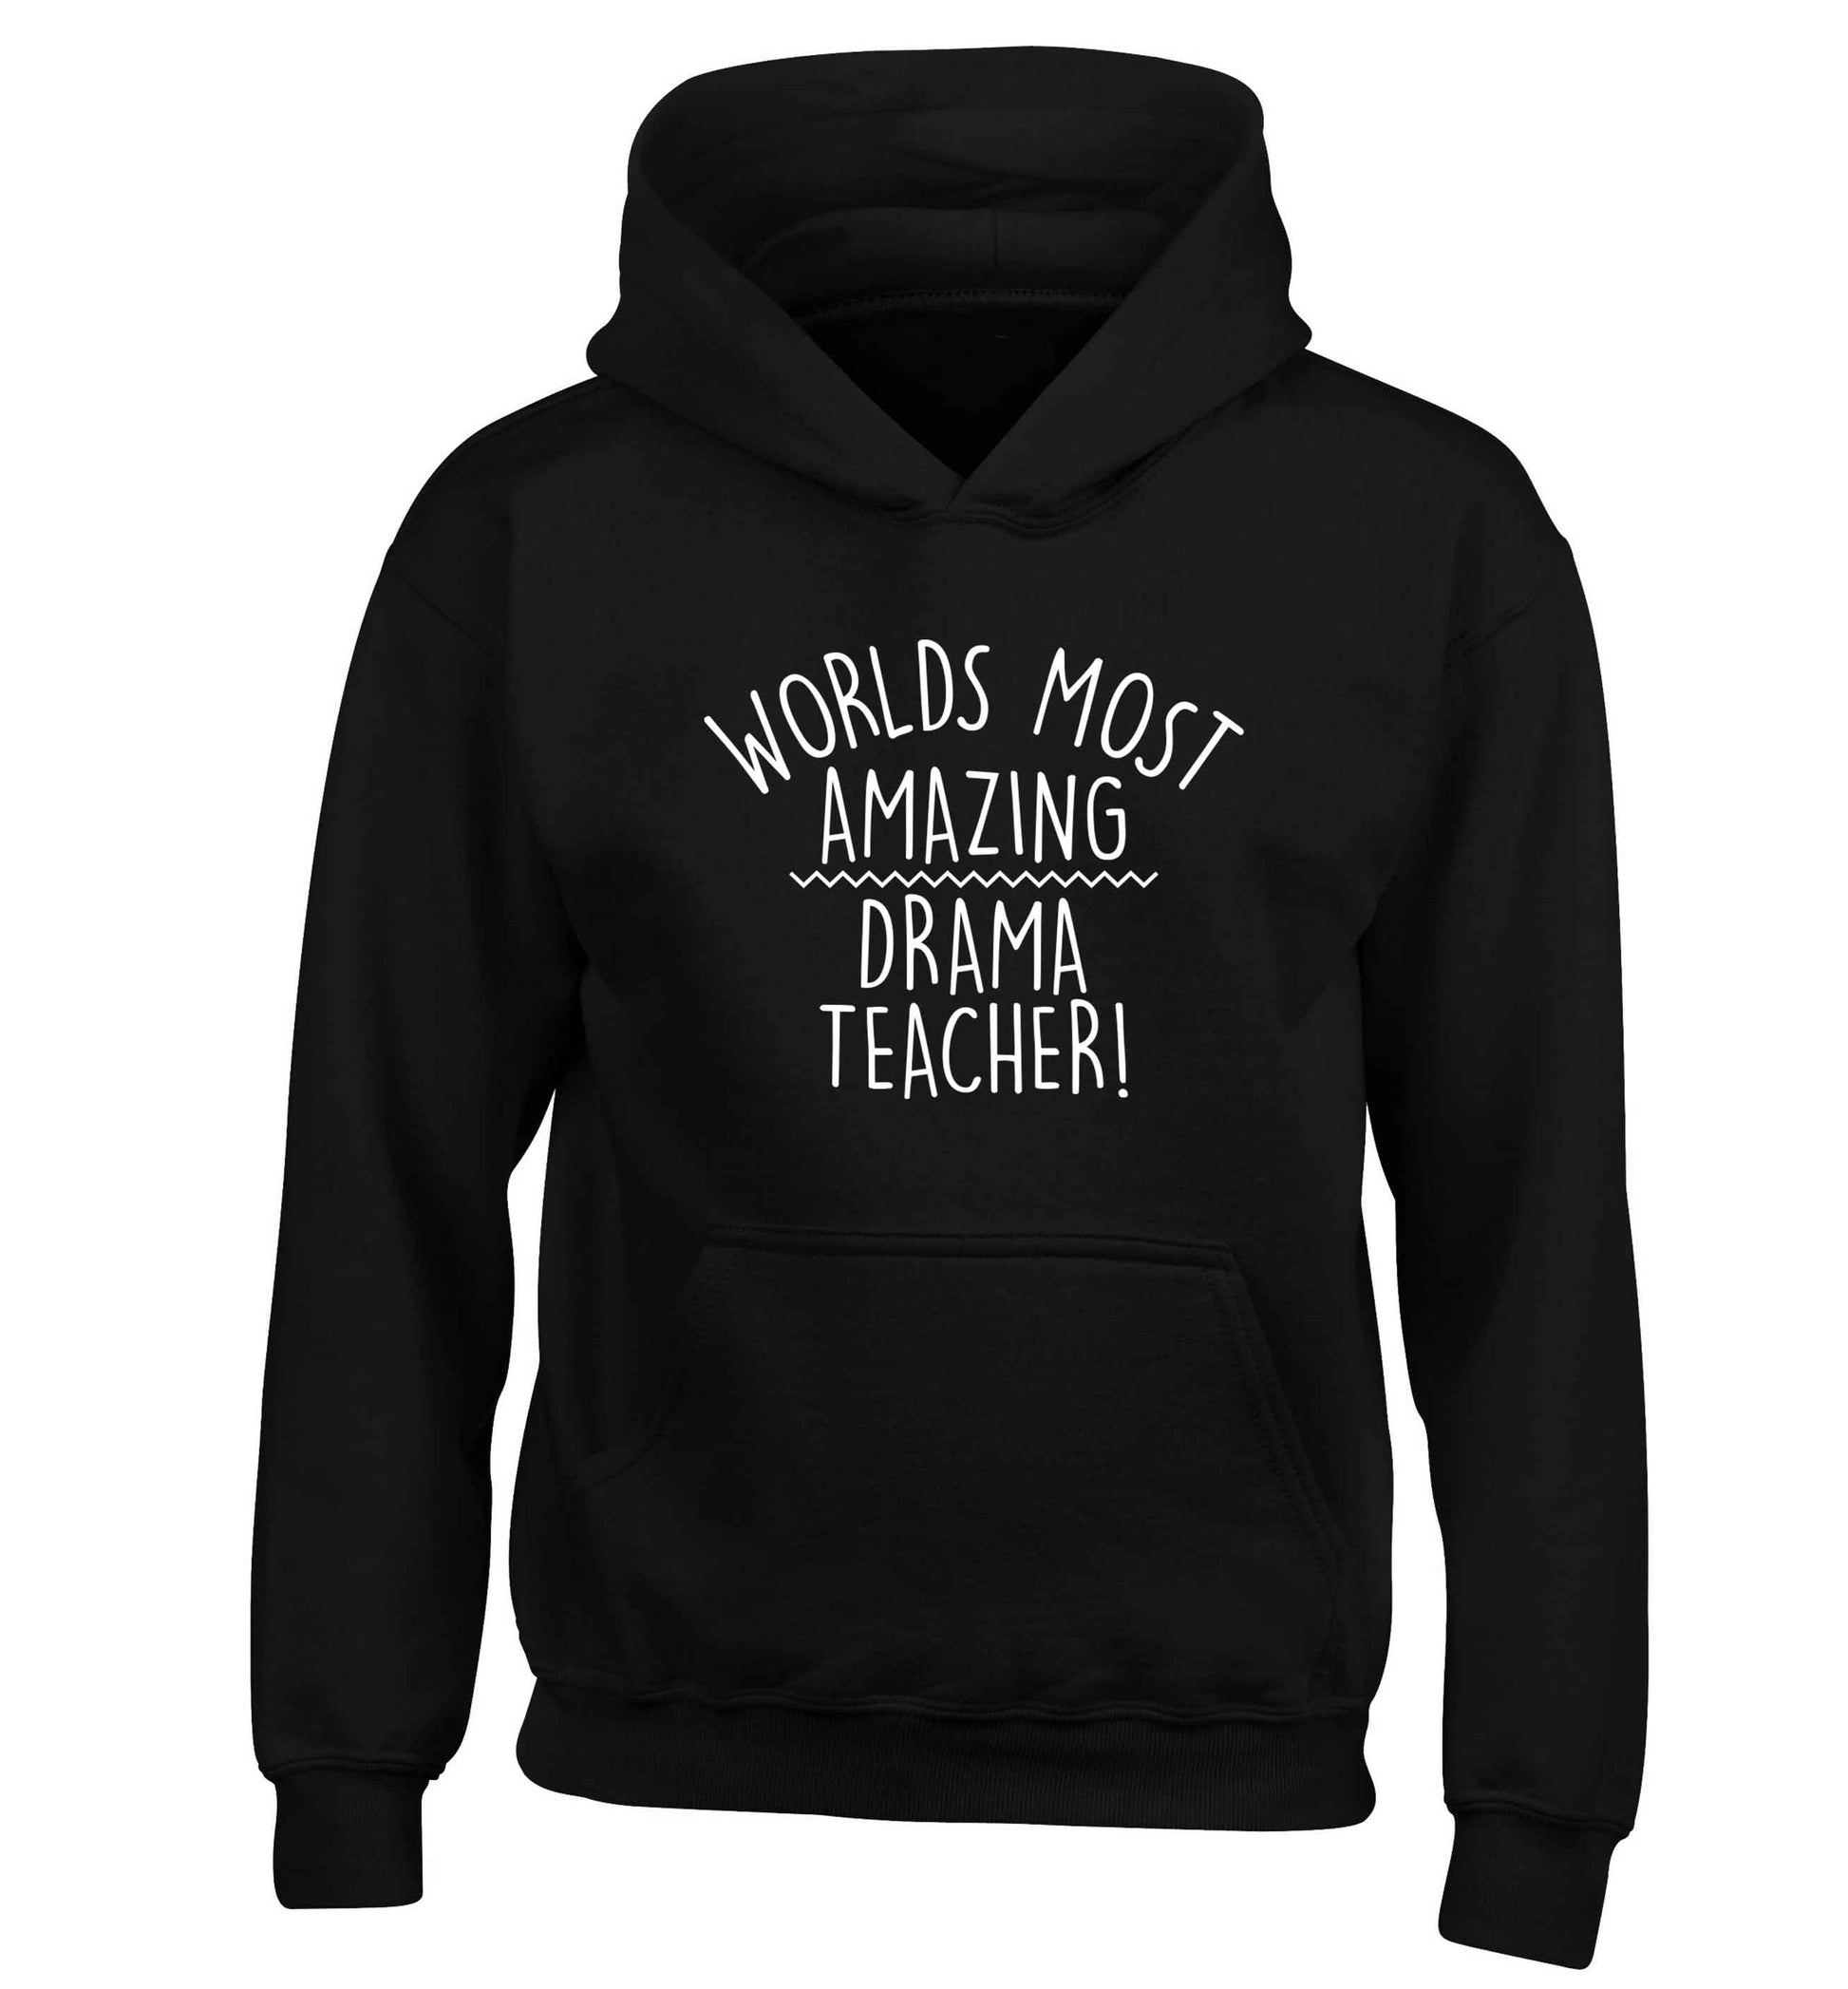 Worlds most amazing drama teacher children's black hoodie 12-13 Years